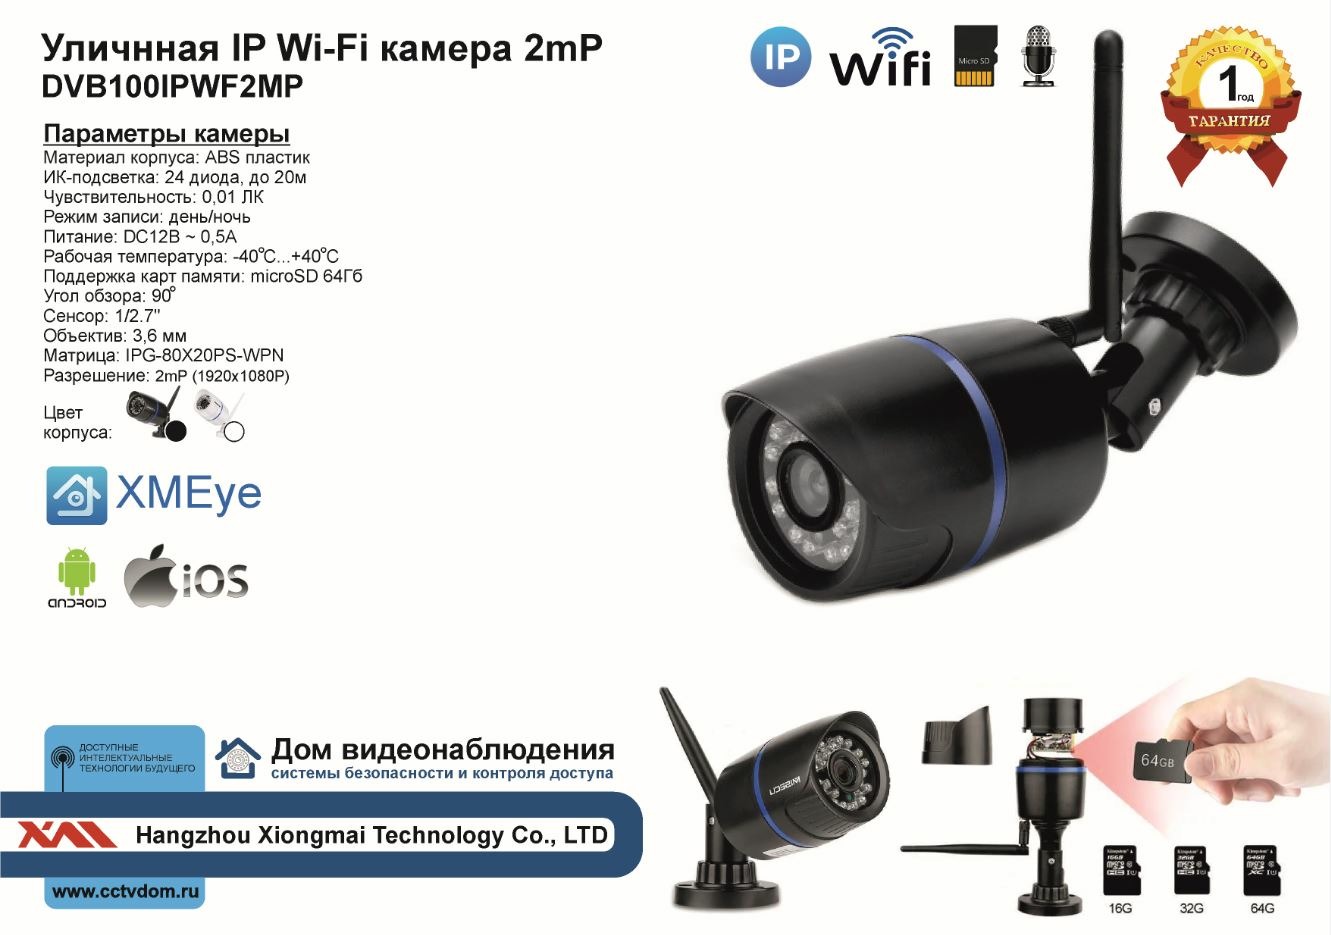 картинка DVW100IPWF2MP. Уличная IP Wi-Fi камера видеонаблюдения 2 мП 1080P от магазина Дом Видеонаблюдения (CCTVdom)